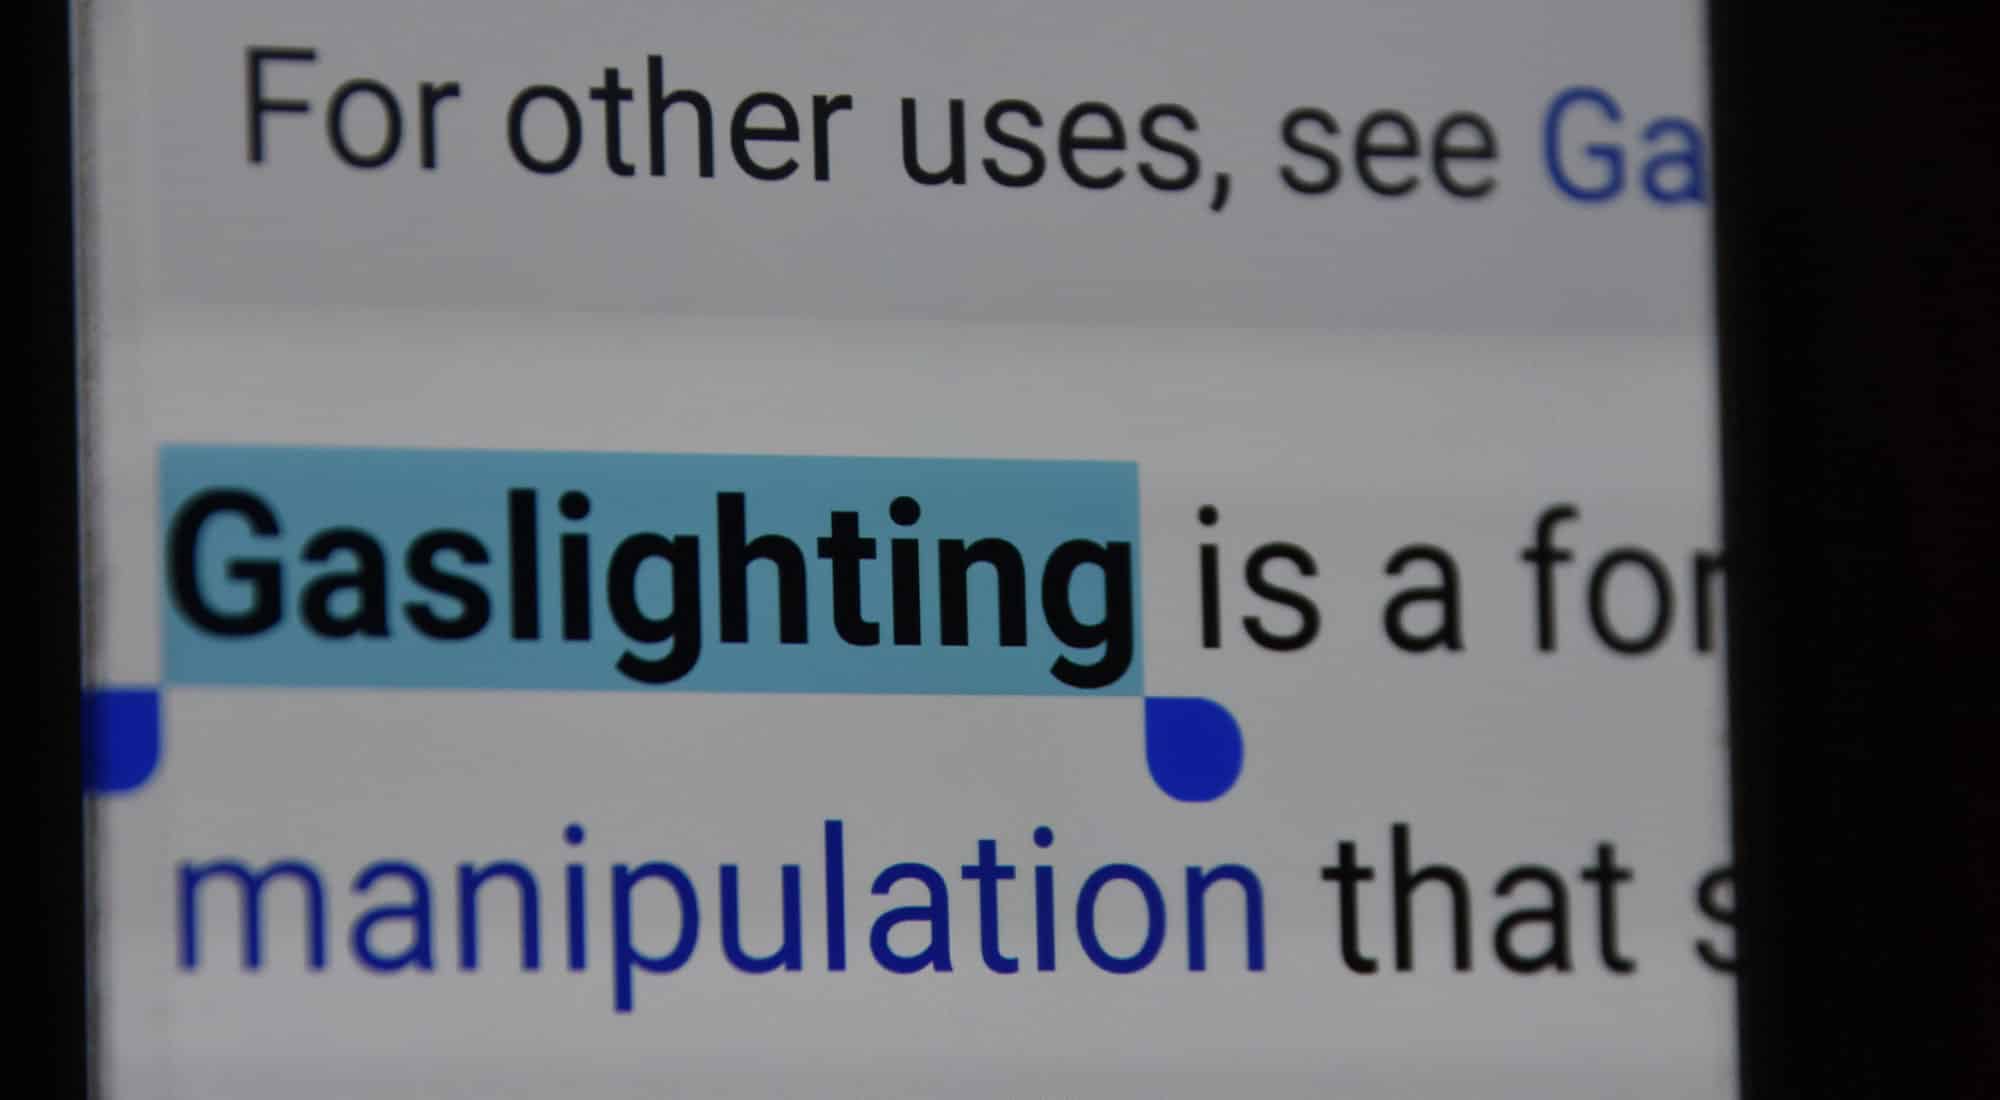 gaslighting definition on Google search